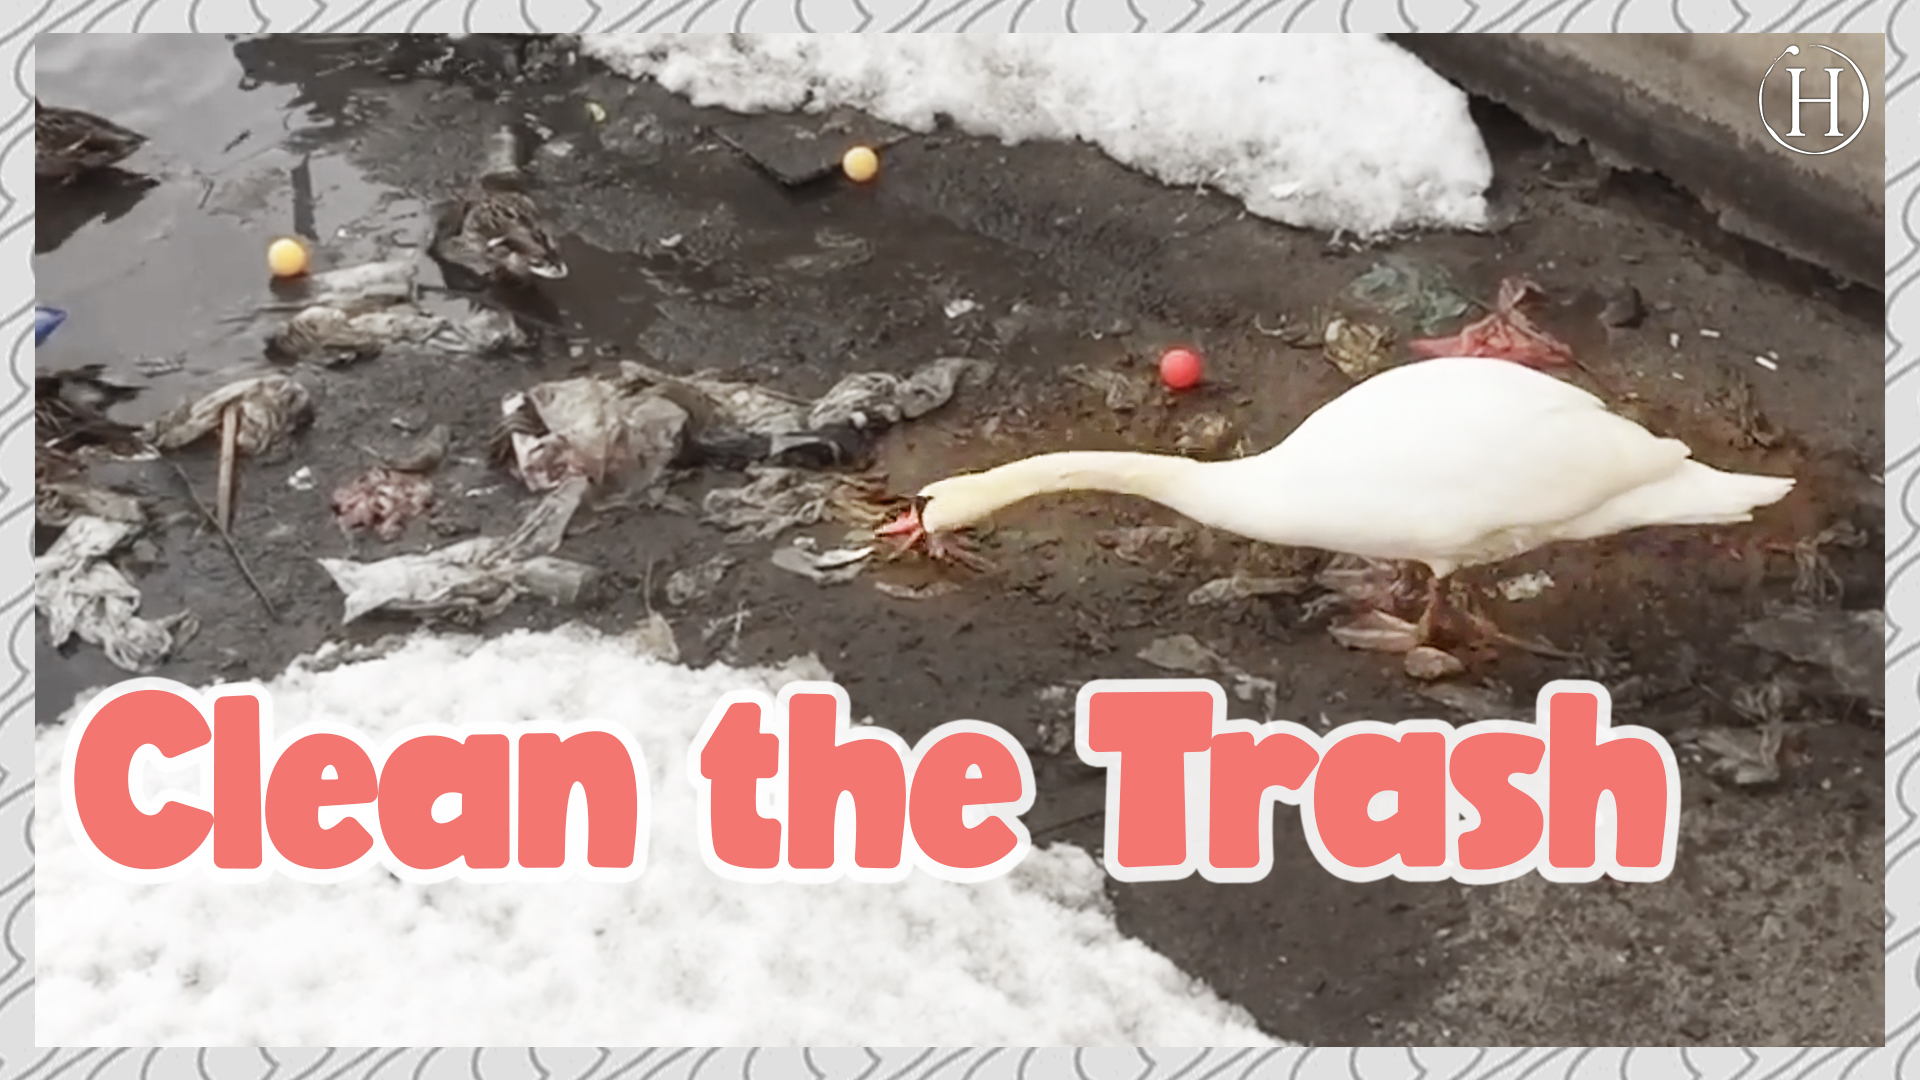 Swan Cleans Lake of Trash  | Humanity Life